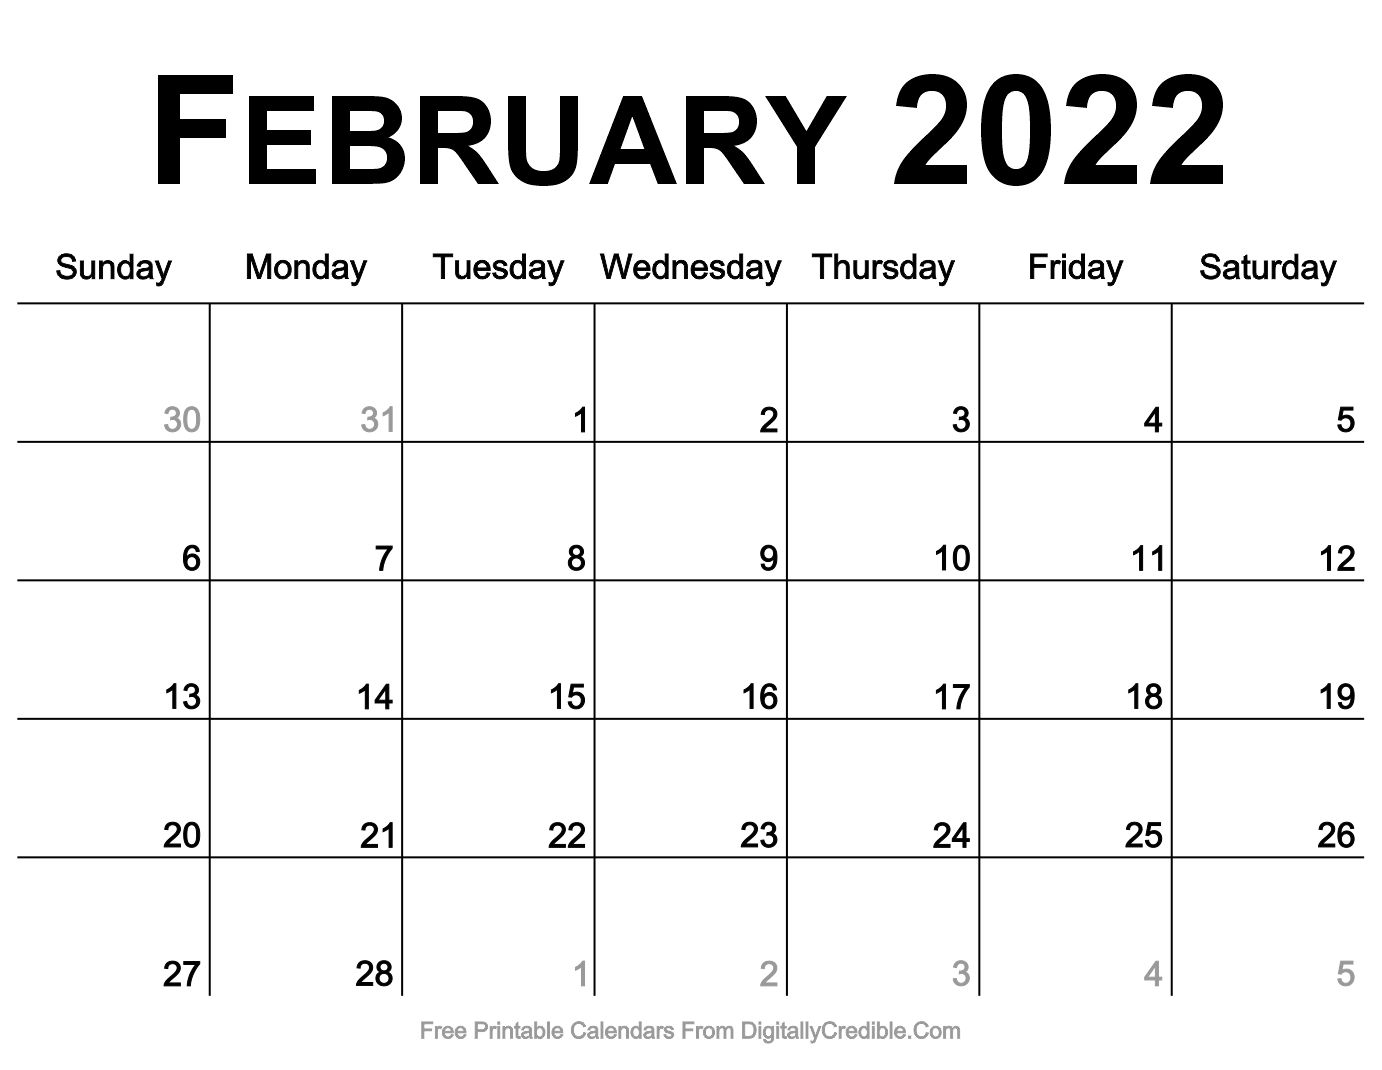 February 2022 Calendar Printable - Desk &amp; Wall